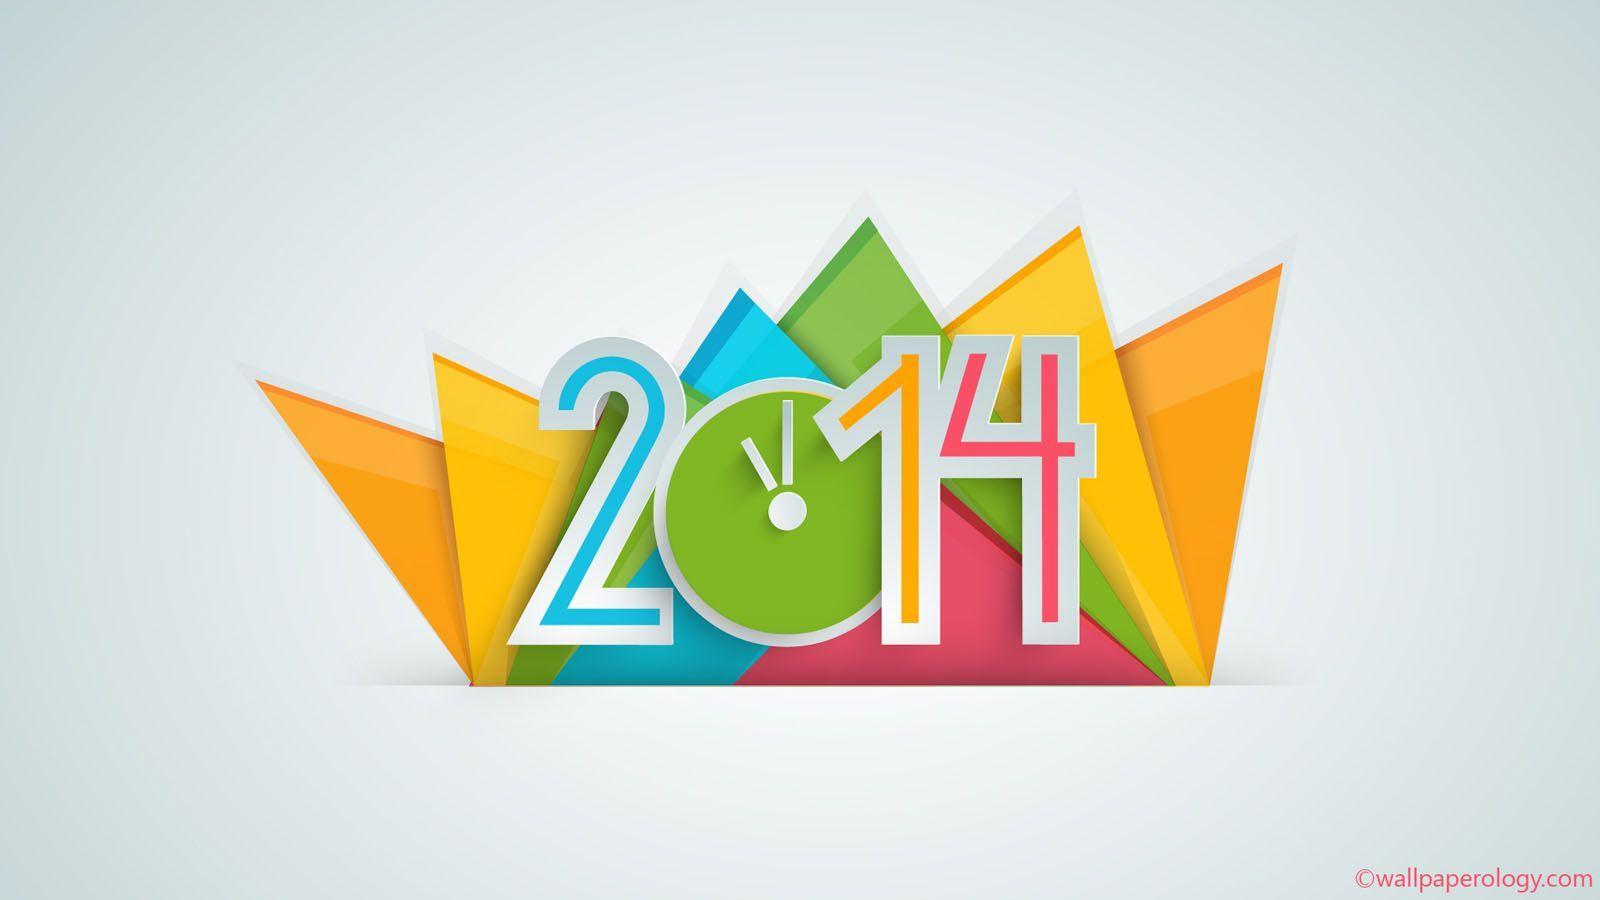 Beautiful 2014 New Year Wallpaper for your desktop